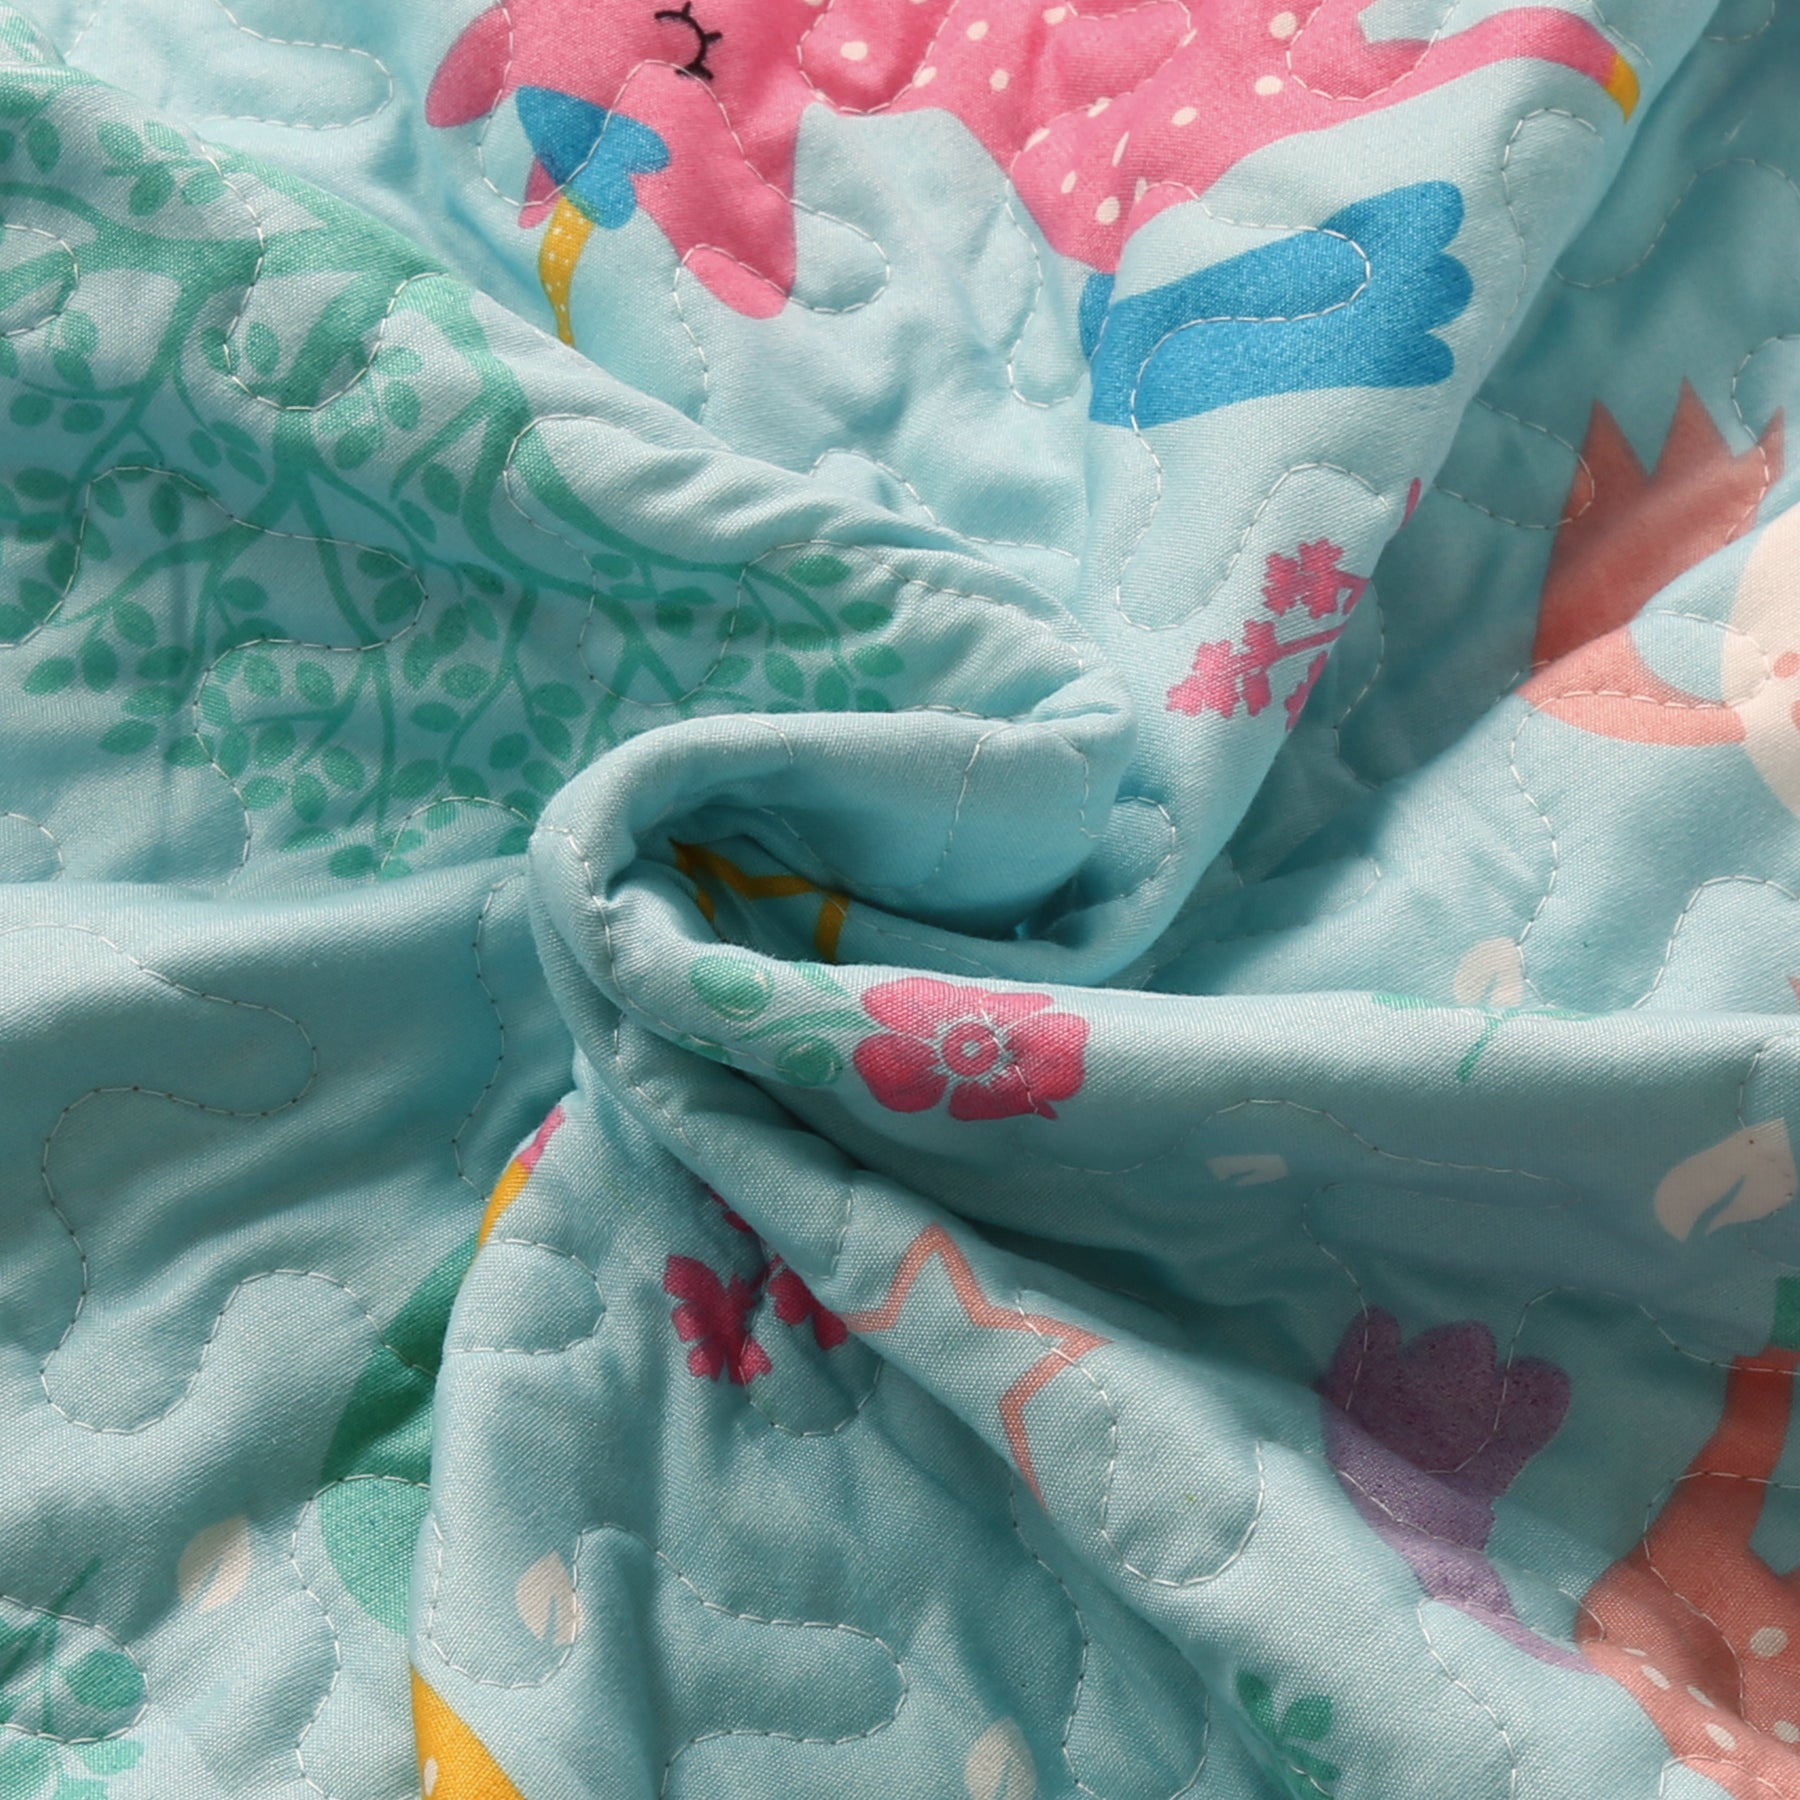 2/3 Piece Kids Quilt Bedspread Set Throw Blanket